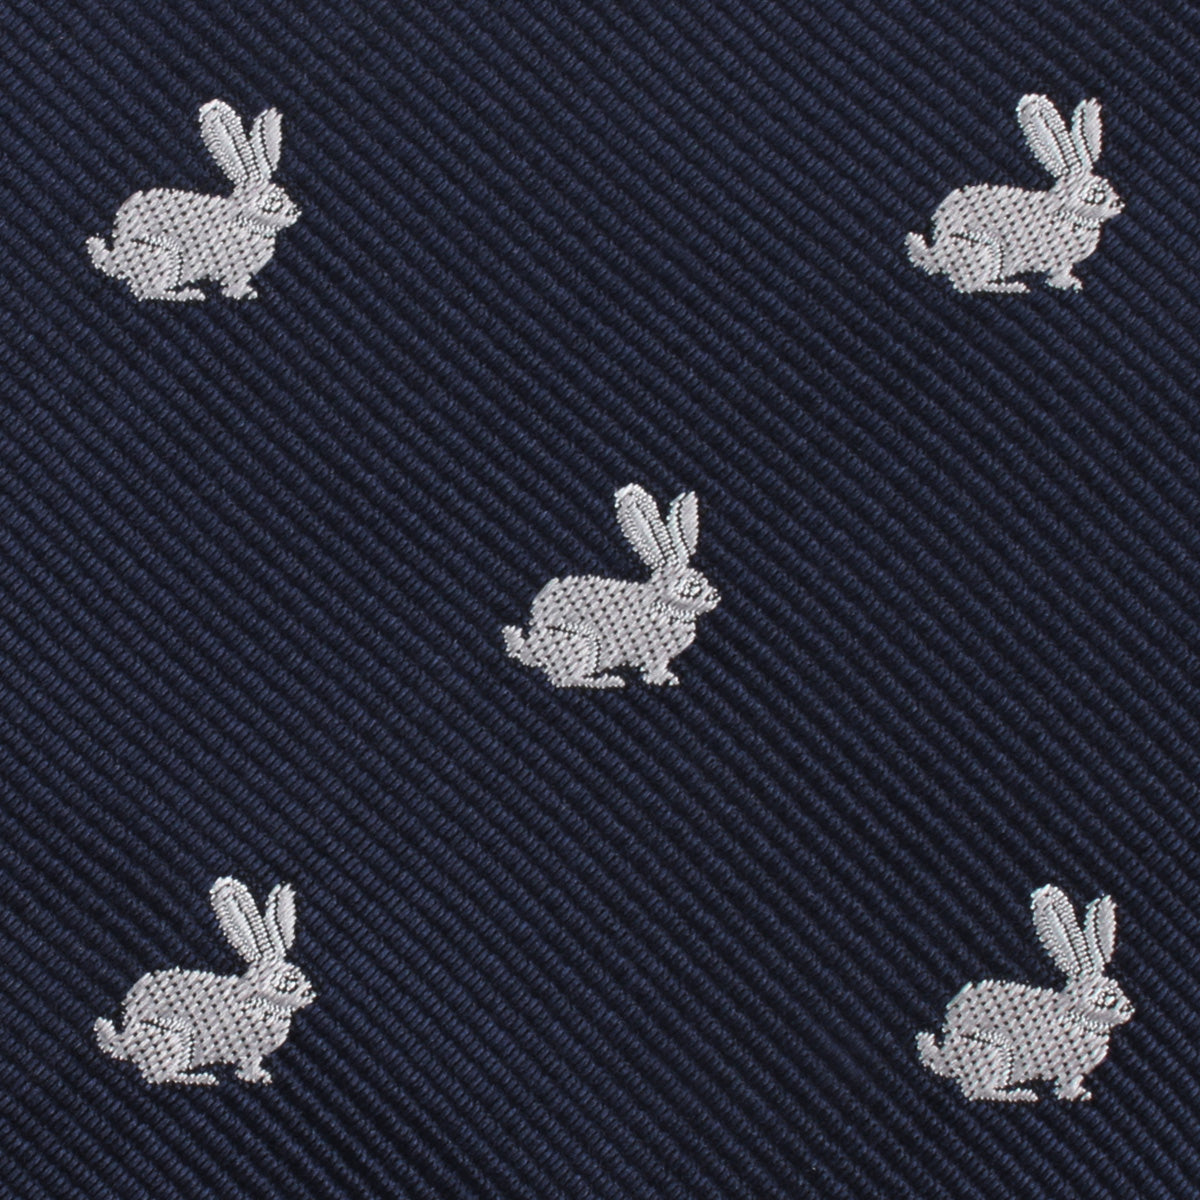 Curious Rabbit Pocket Square Fabric